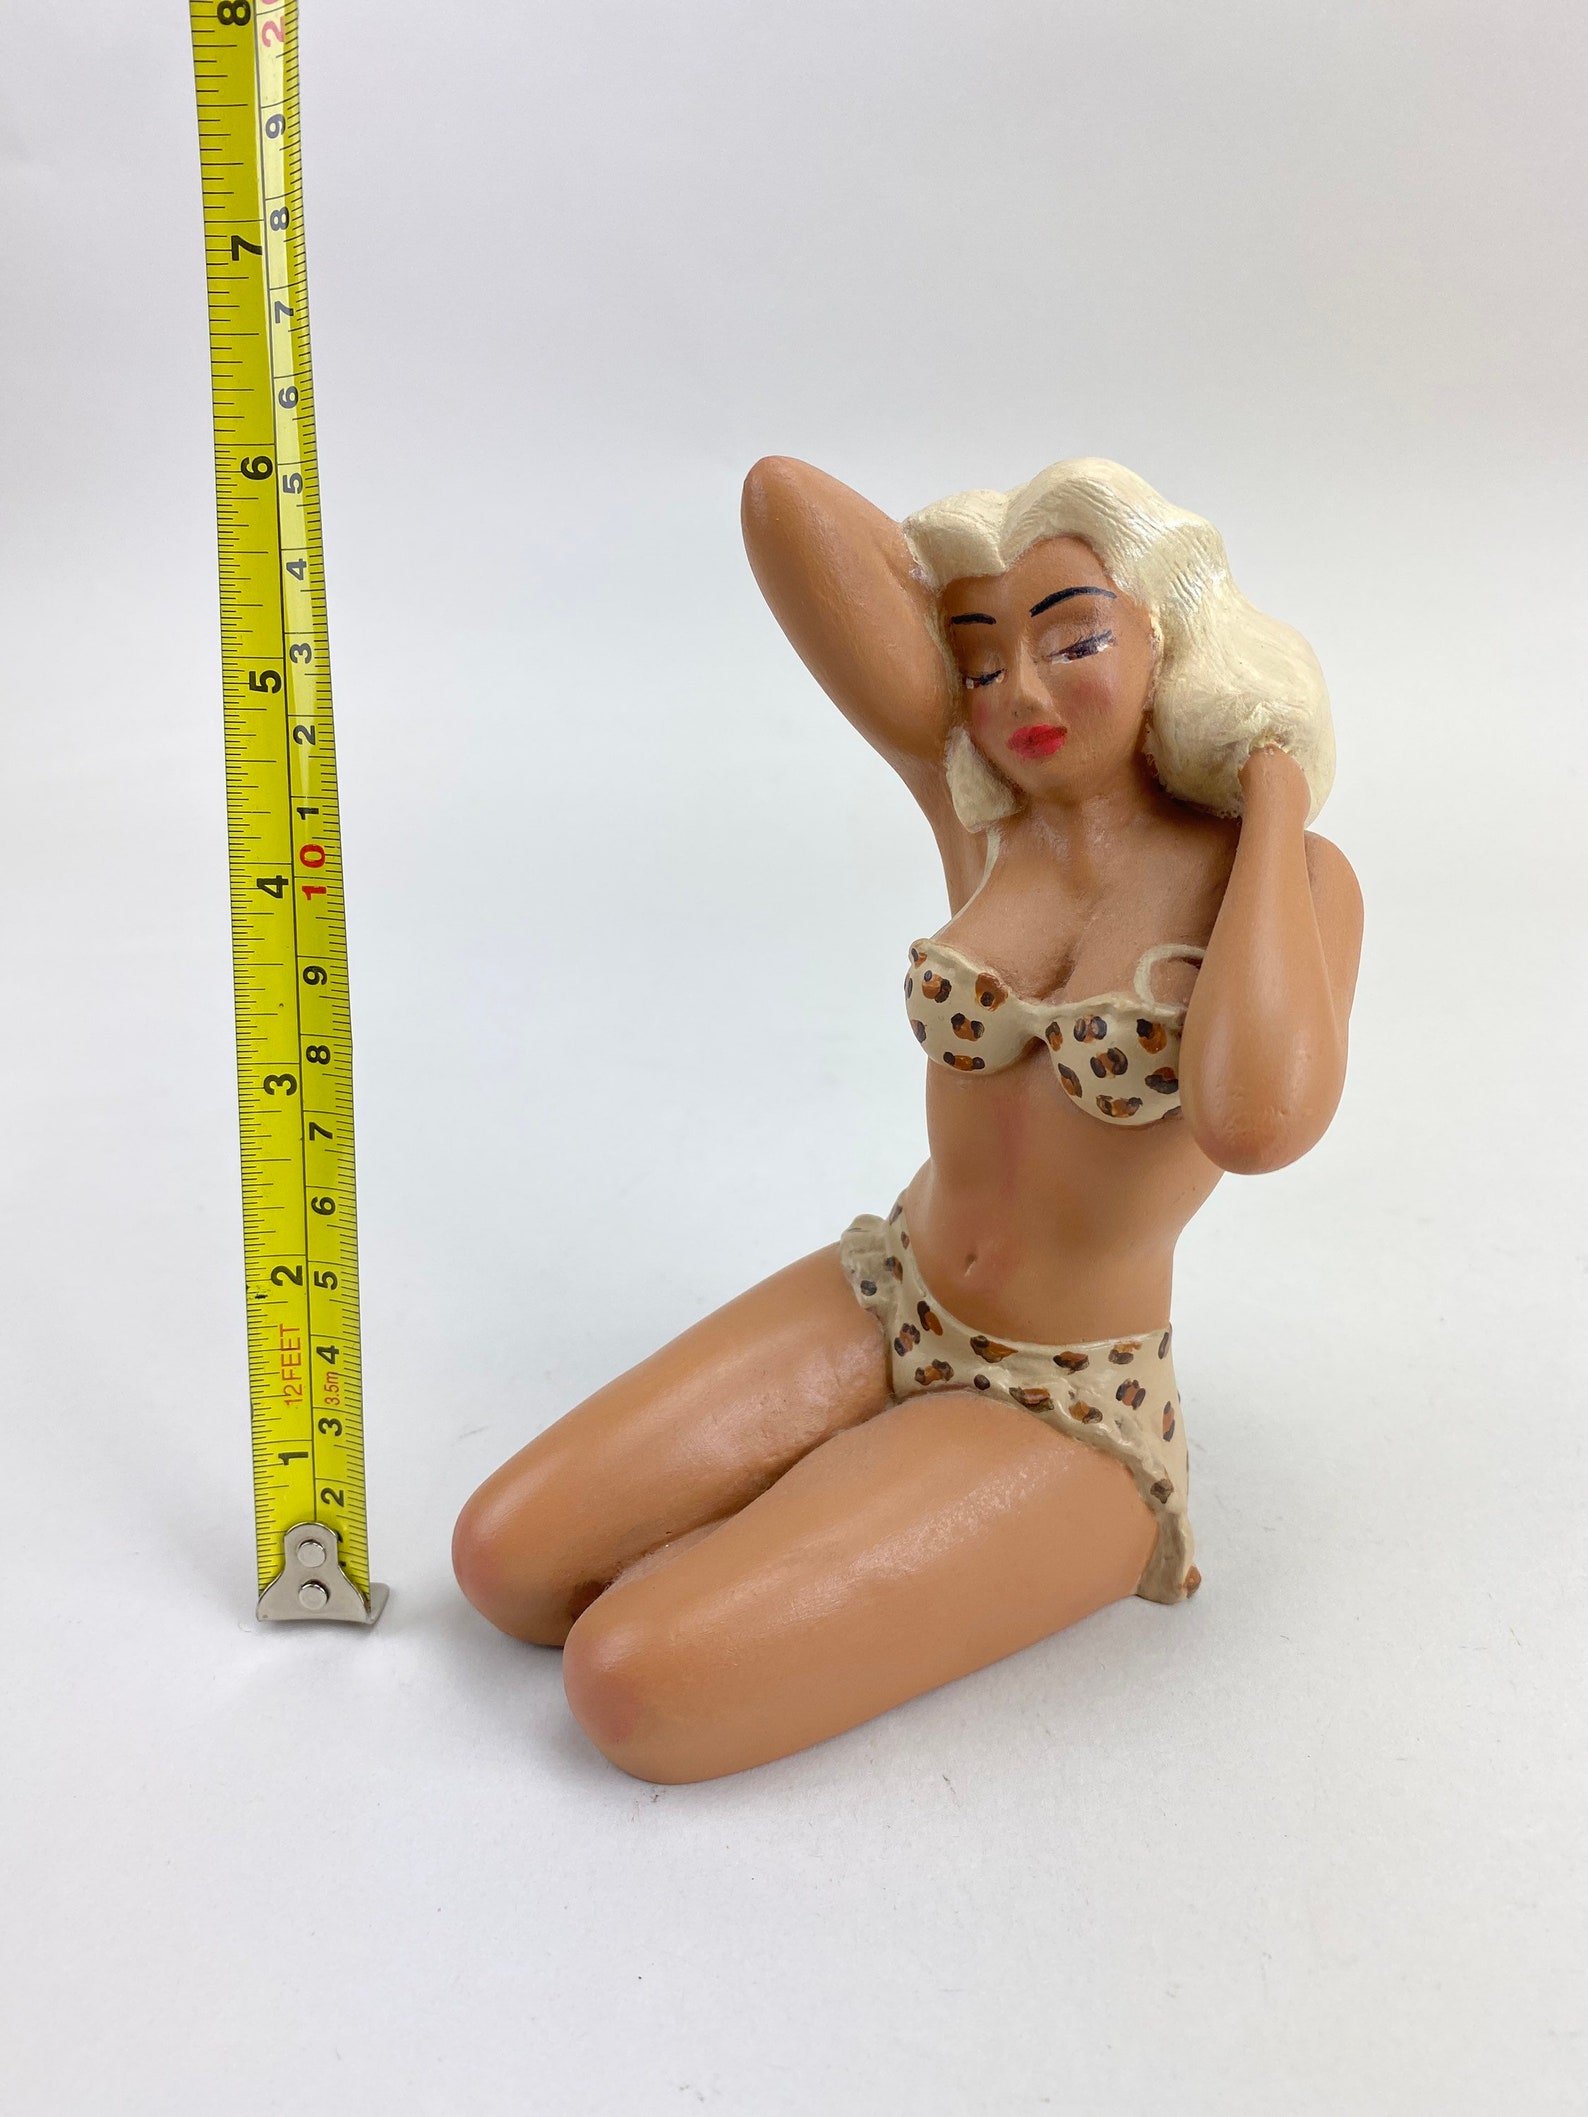 Vintage Pinup Chalkware Girl Figurine Risque Ceramic Bikini Etsy